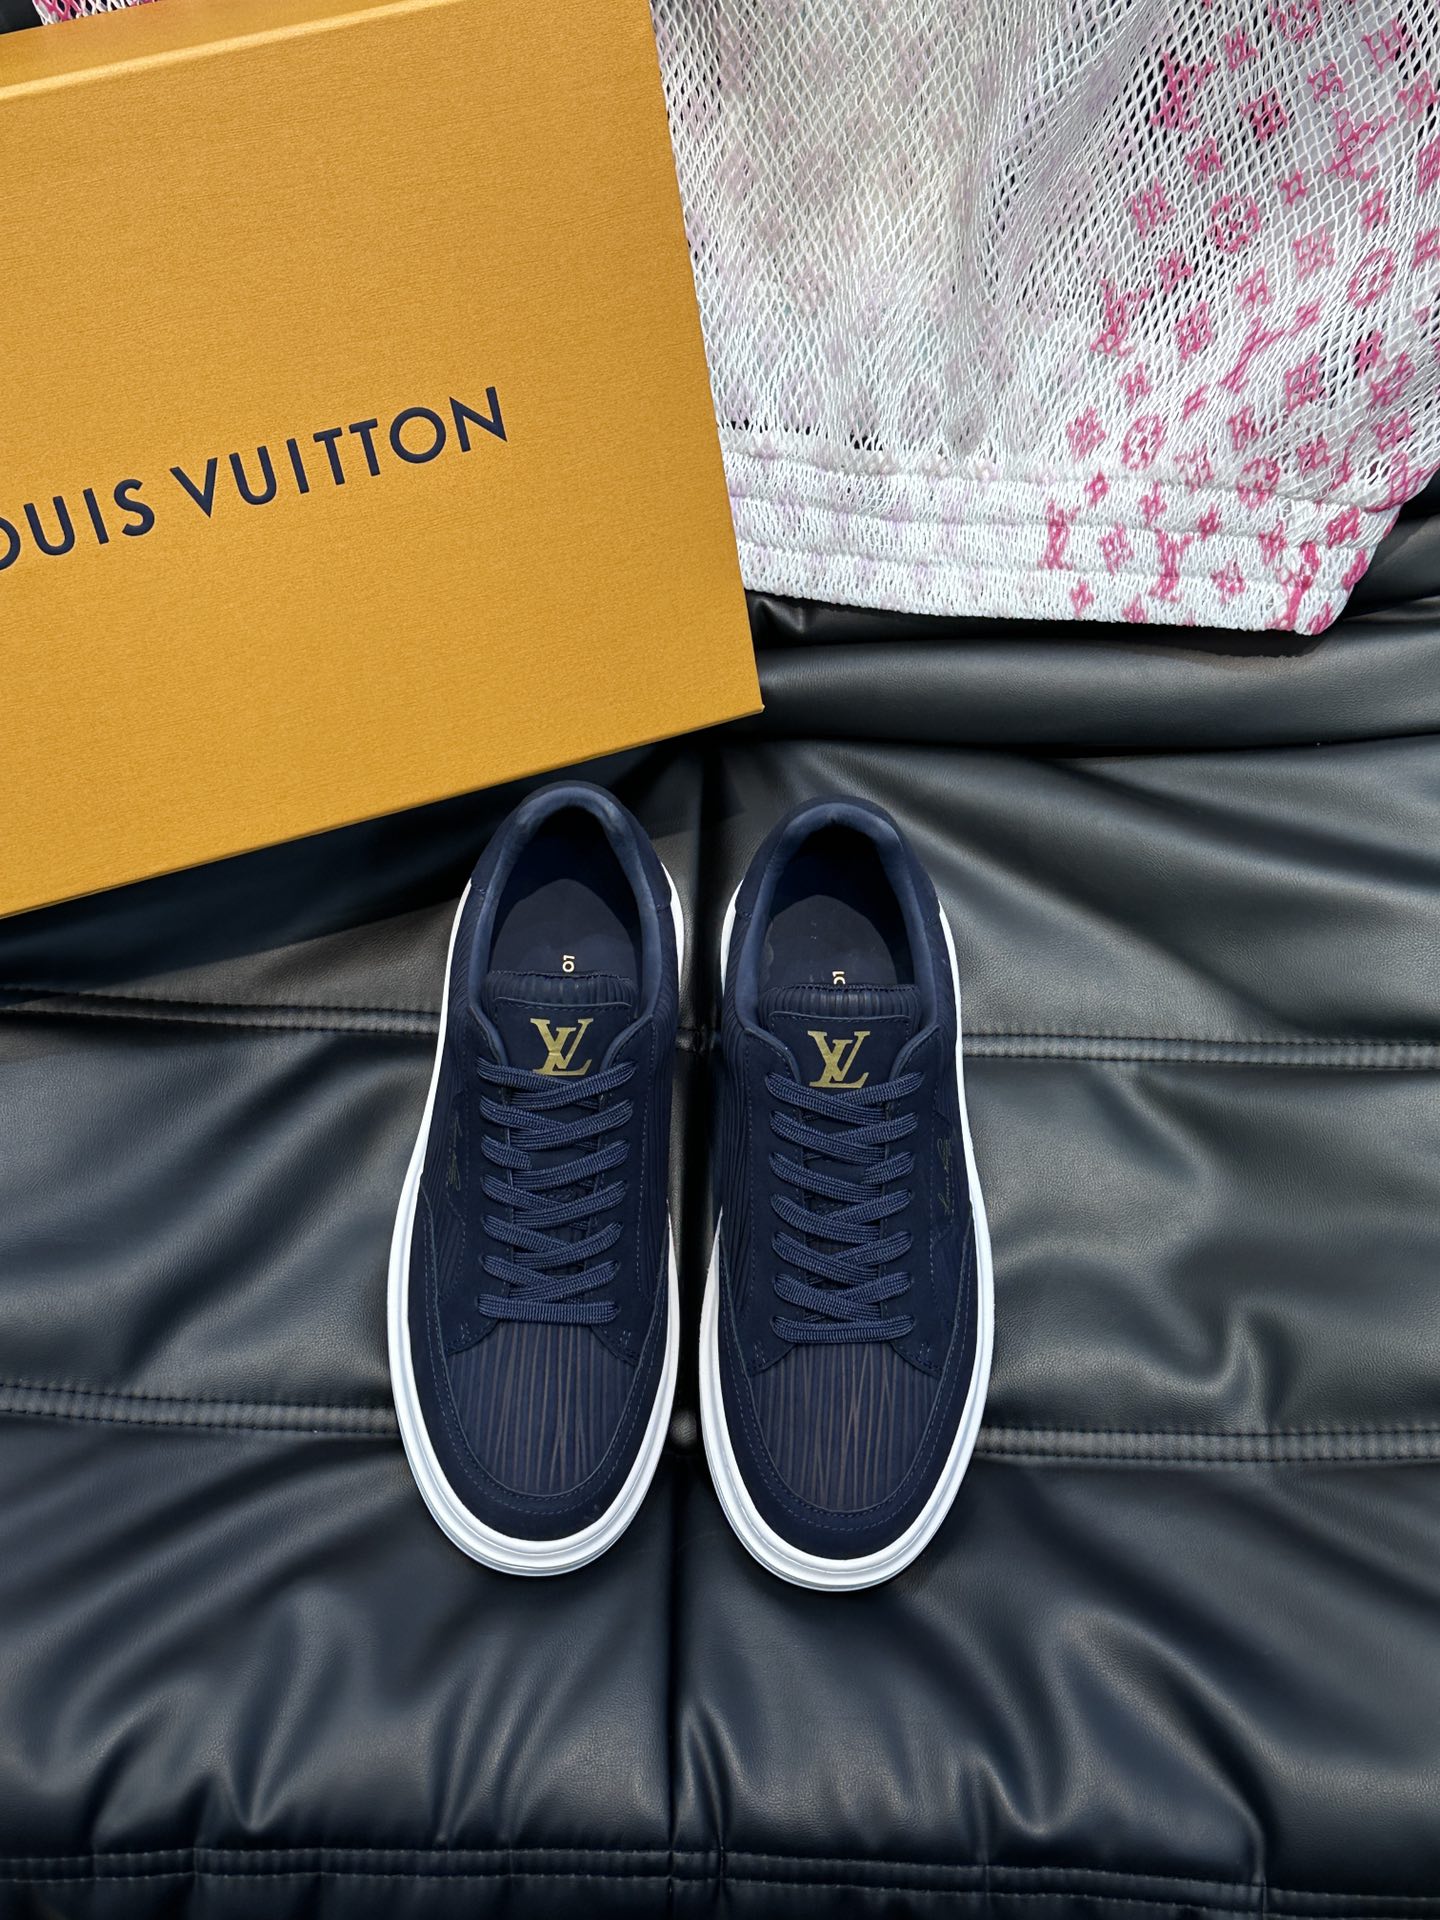 Louis Vuitton Shoes Sneakers Printing Men Cowhide Rubber Sheepskin Casual